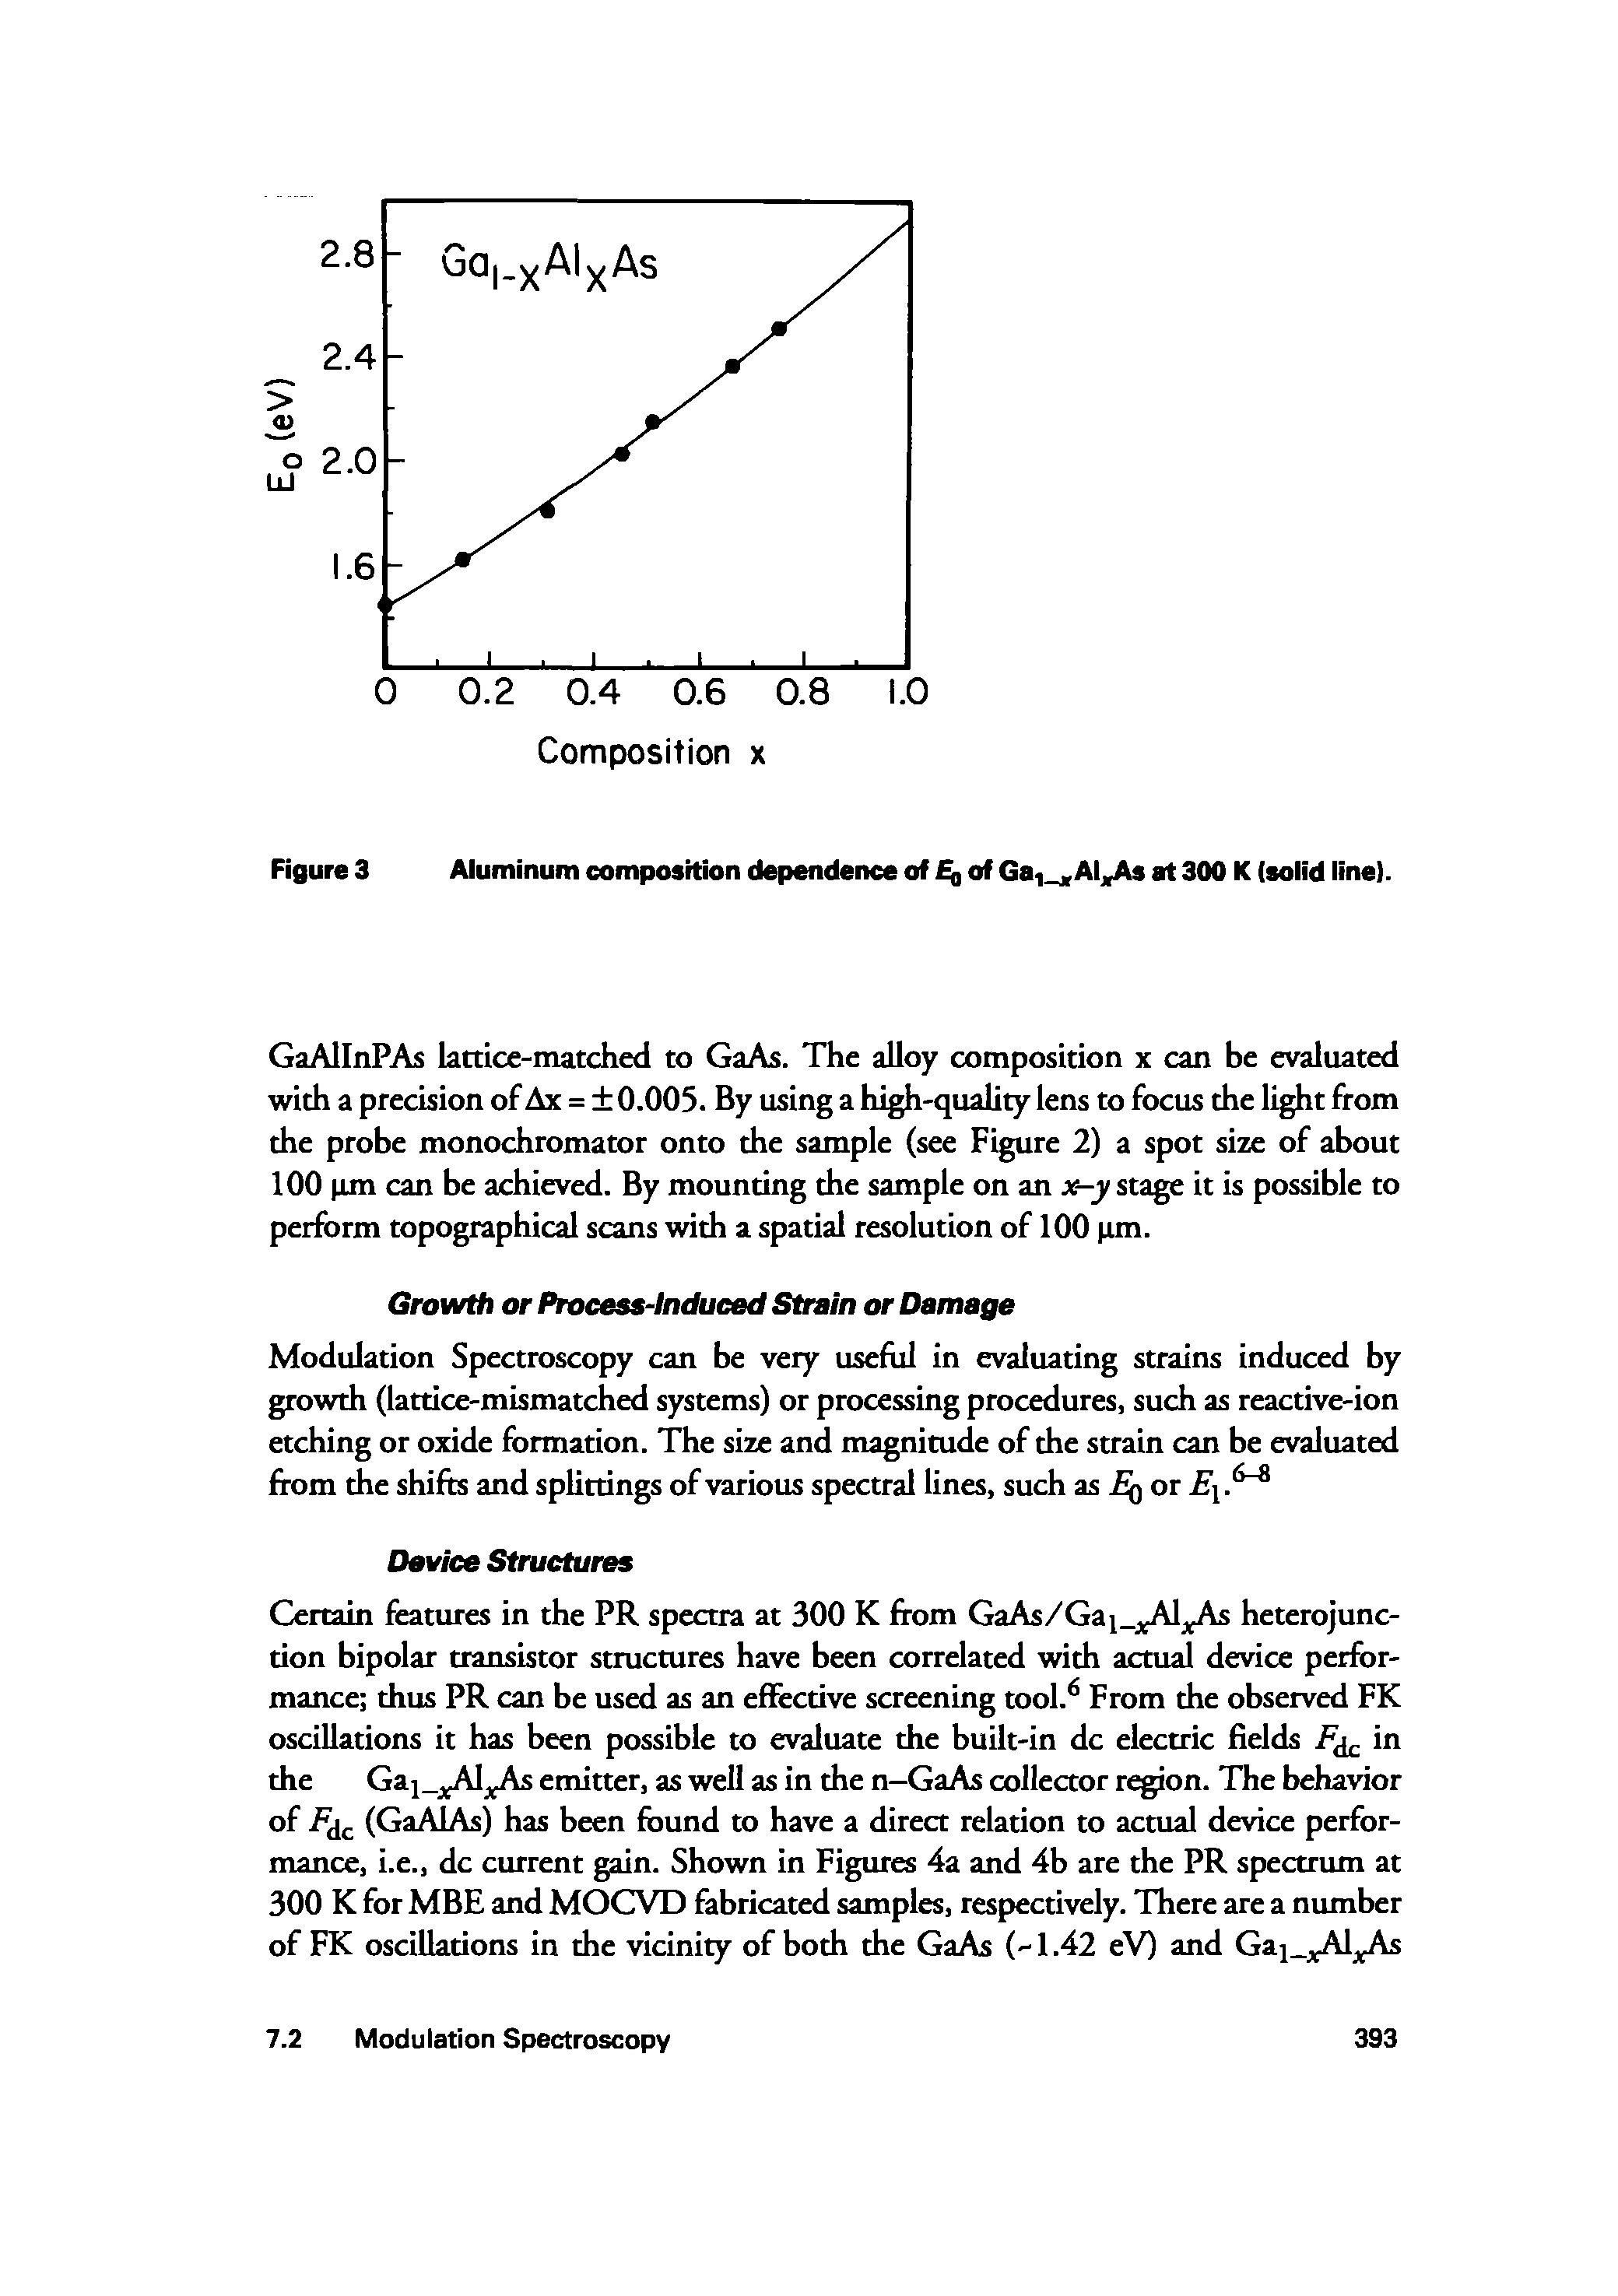 Figure 3 Aluminum composition dependence of of Gai j,Alj s at 300 K (solid line).